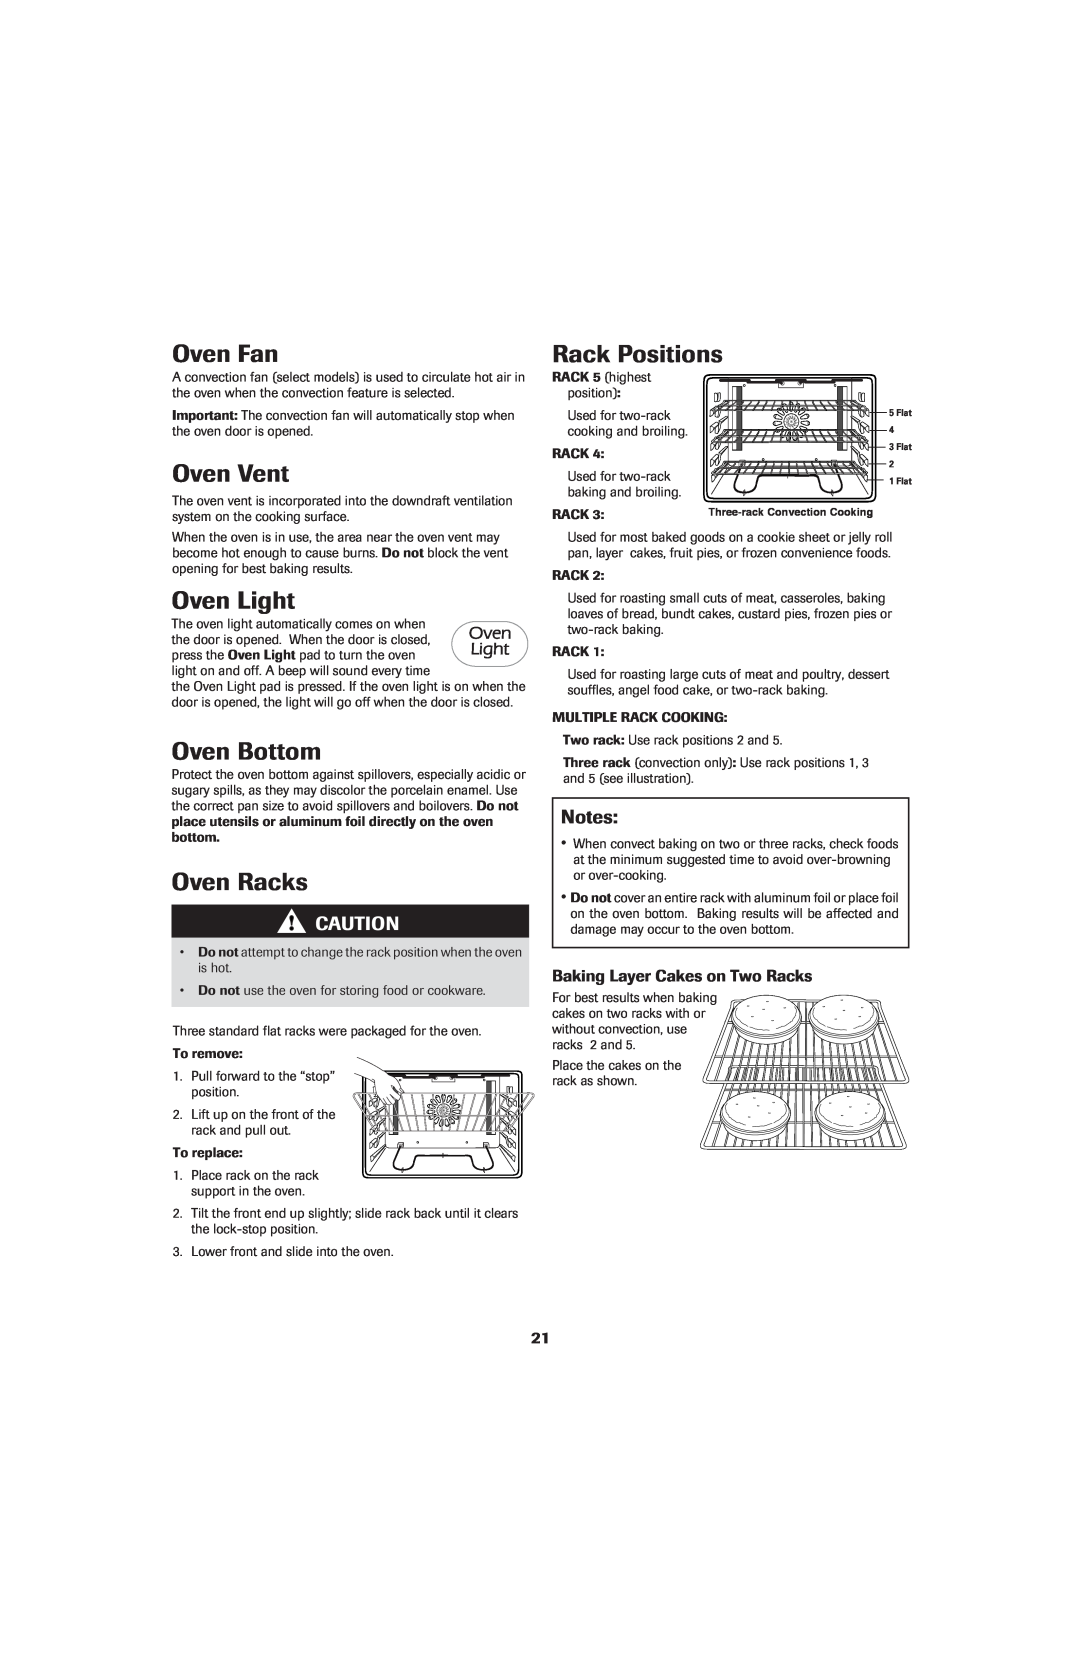 Jenn-Air air filter Oven Fan, Oven Vent, Oven Bottom, Oven Racks, Rack Positions, Baking Layer Cakes on Two Racks, Notes 